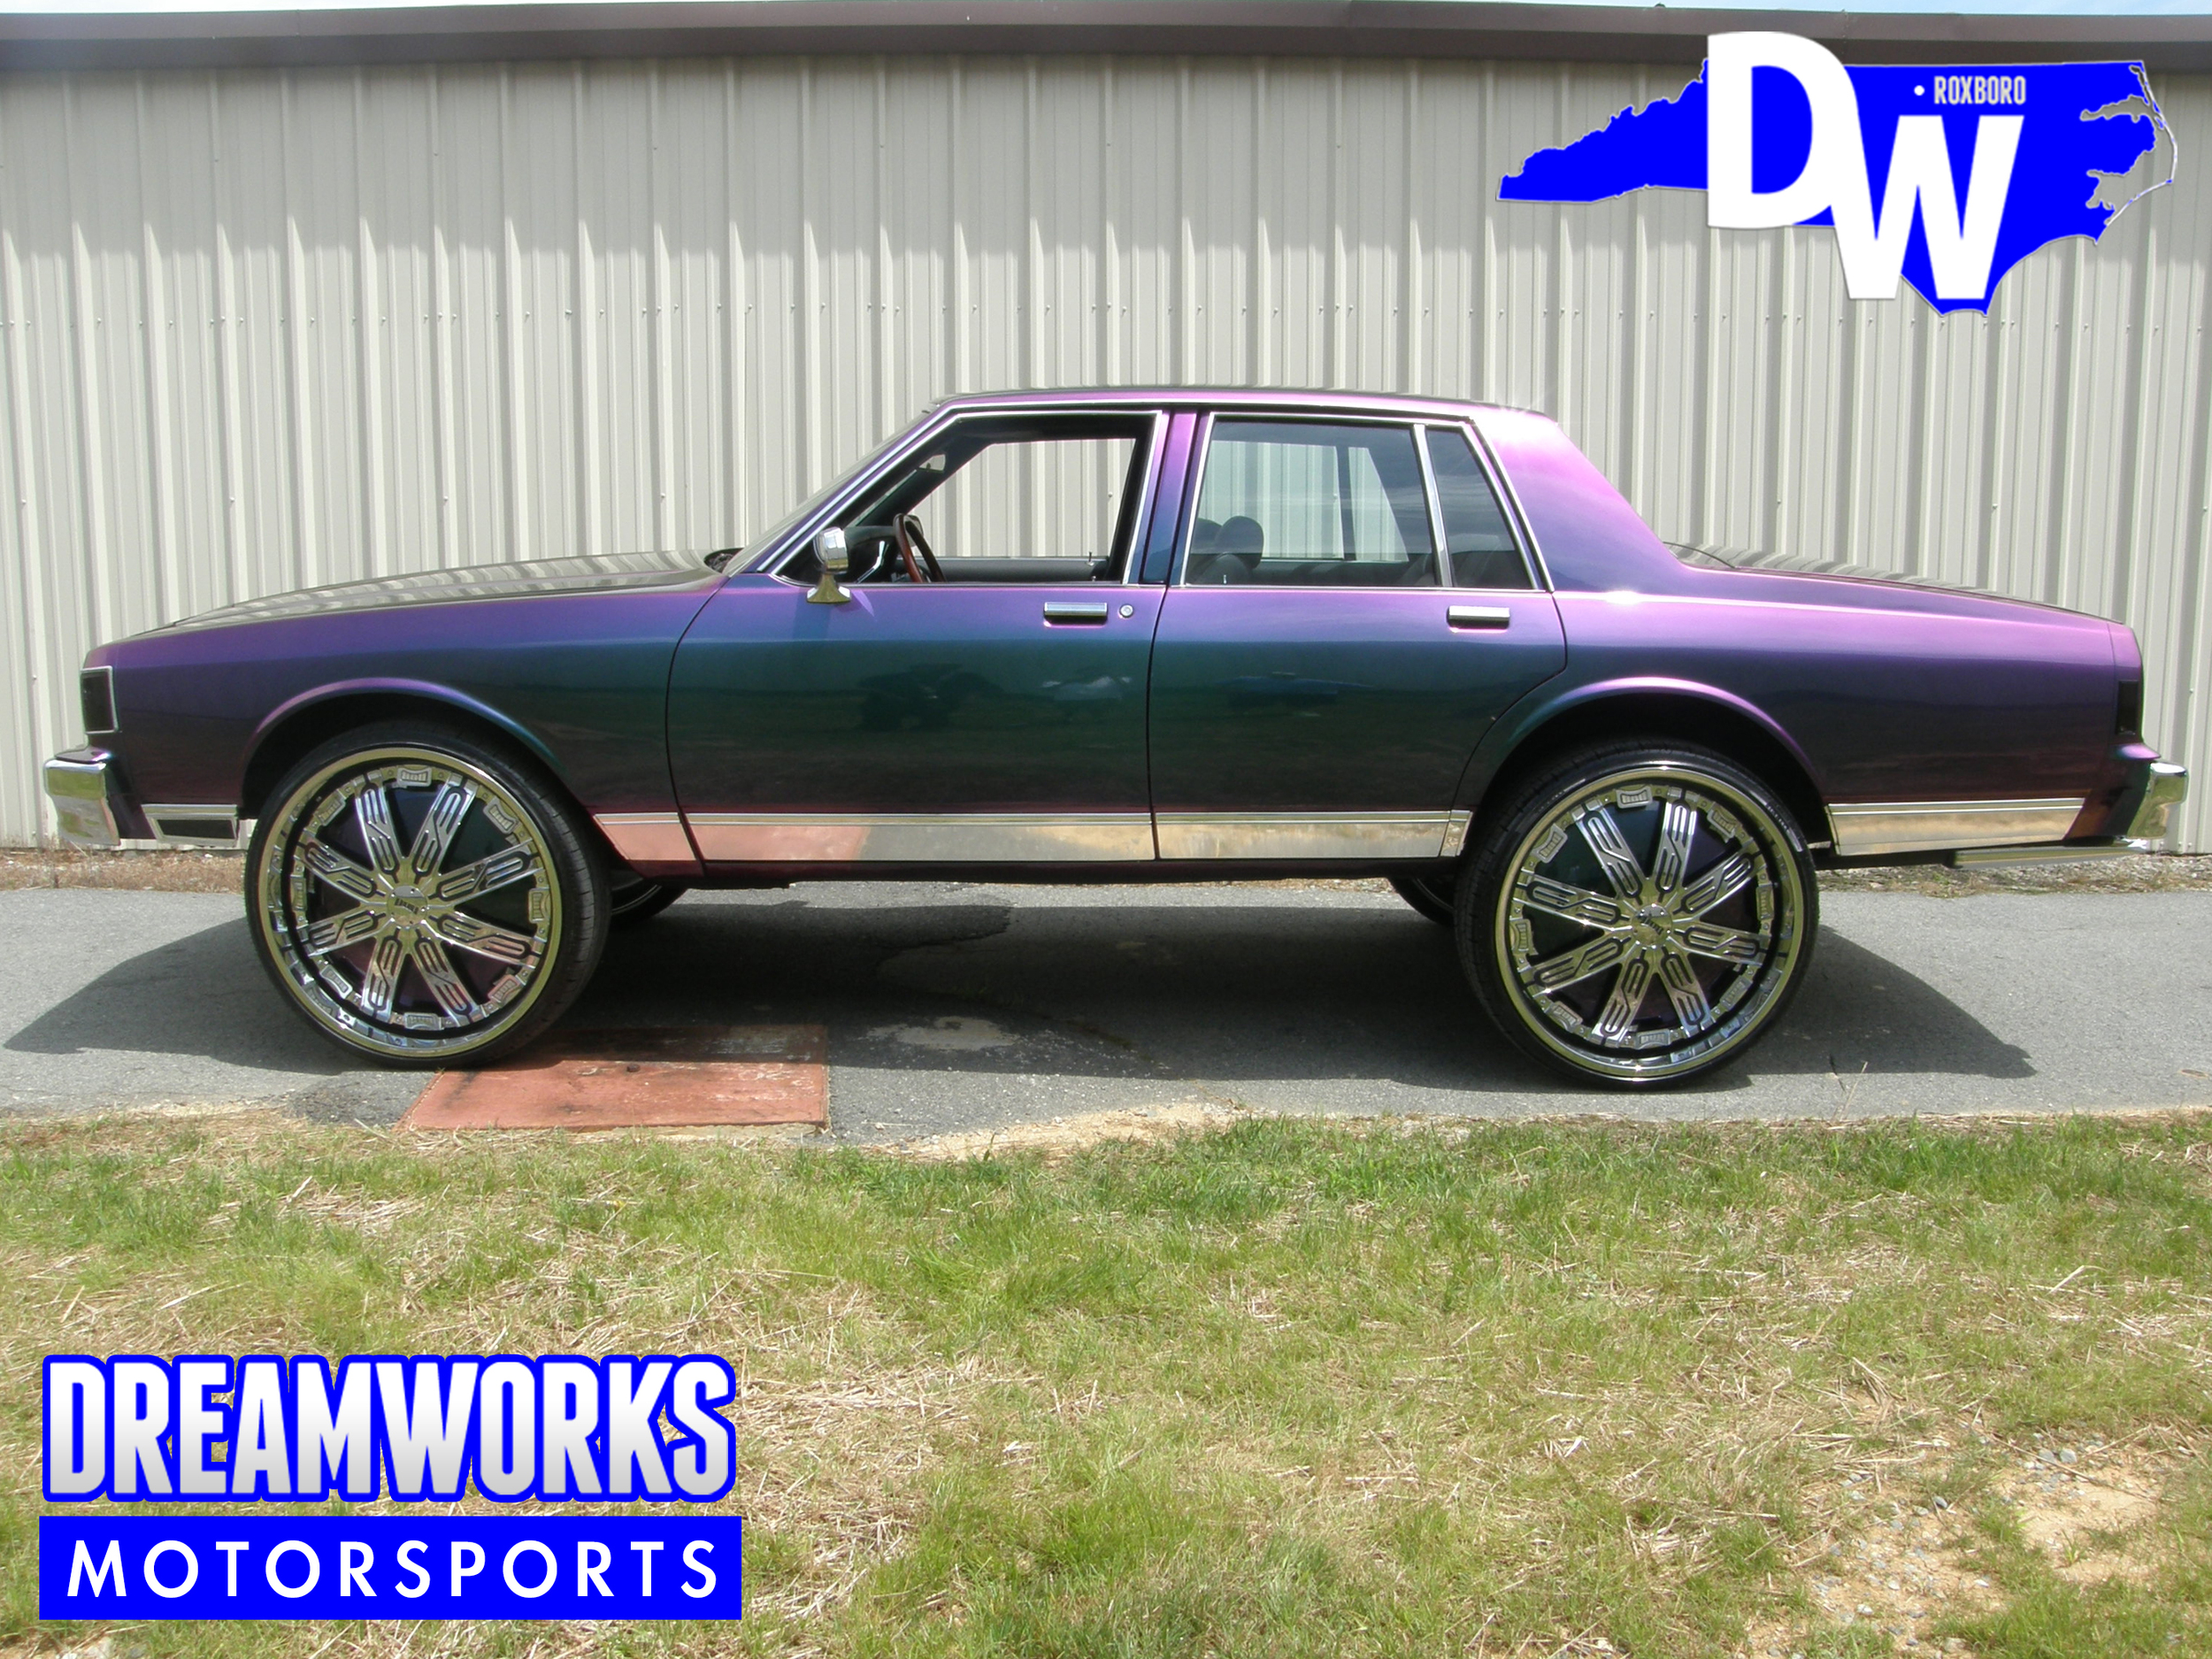 86-Chevrolet-Caprice-DUB-Tycoons-Dreamworks-Motorsports-1.jpg